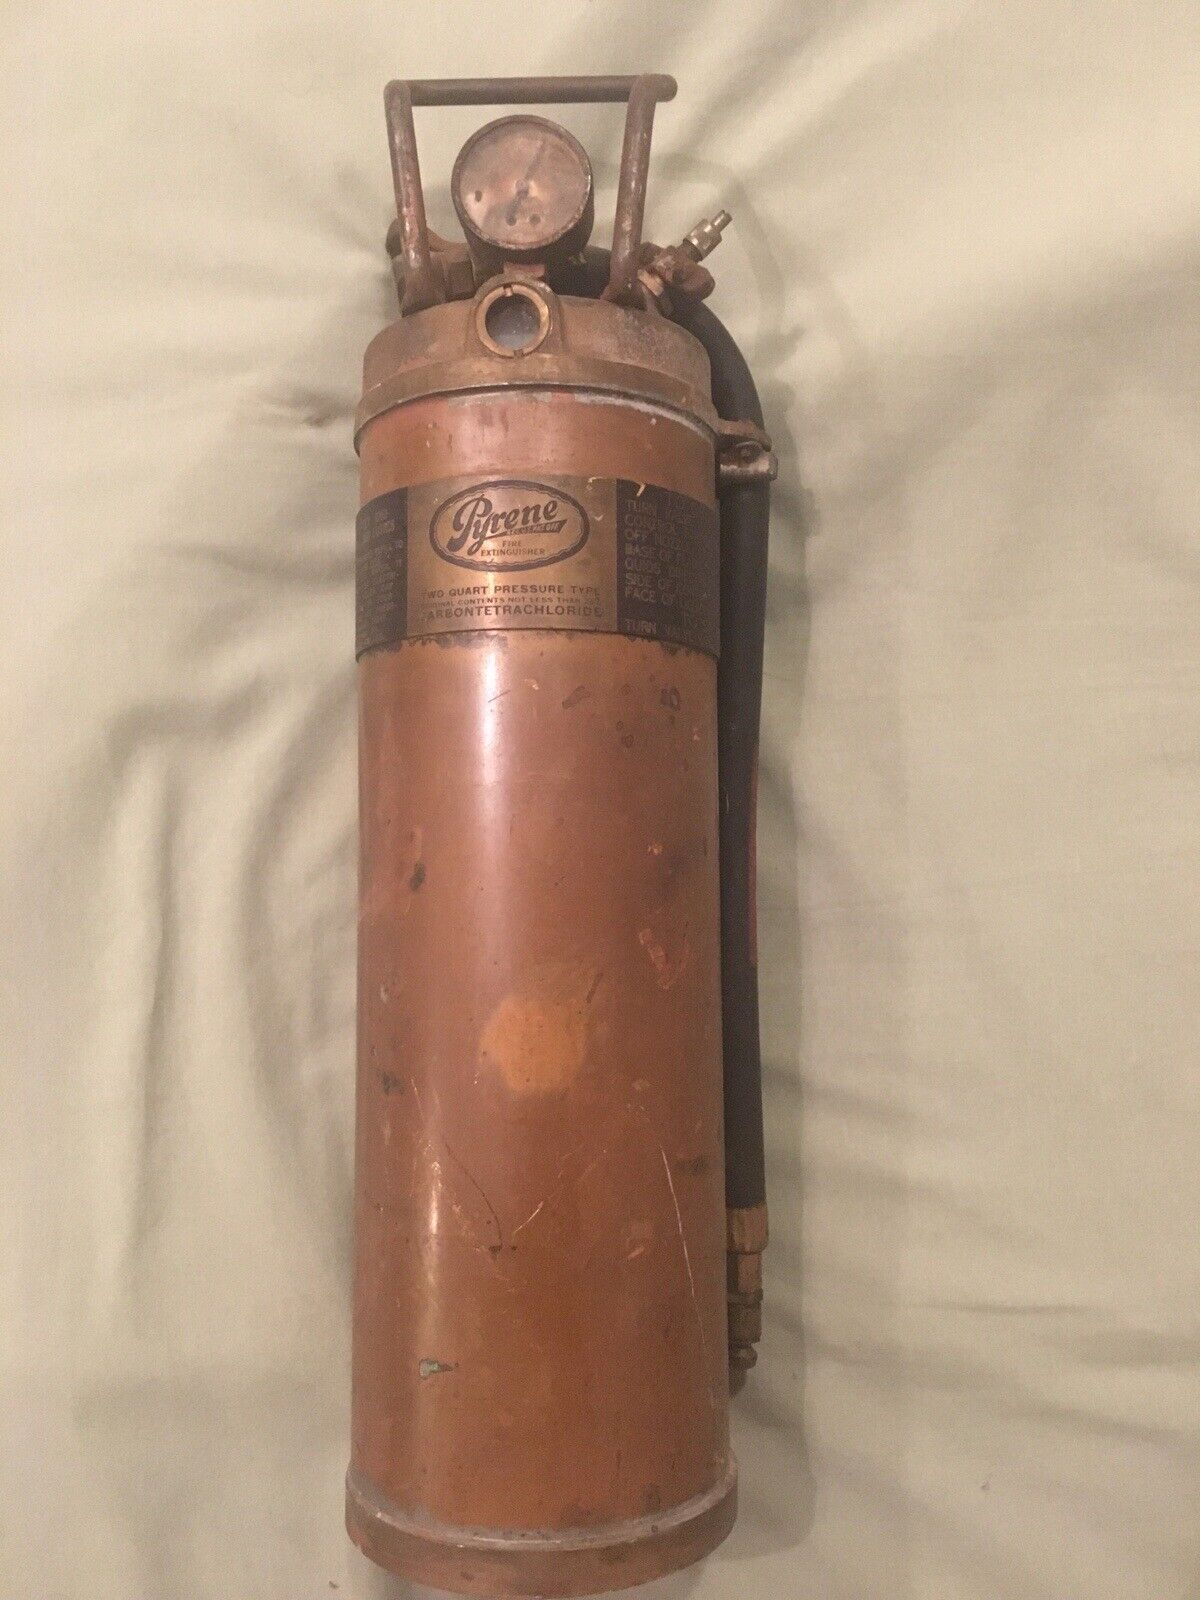 Rare Antique Pyrene Copper Fire Extinguisher 2 Quart Pressure Type Gauge - Empty